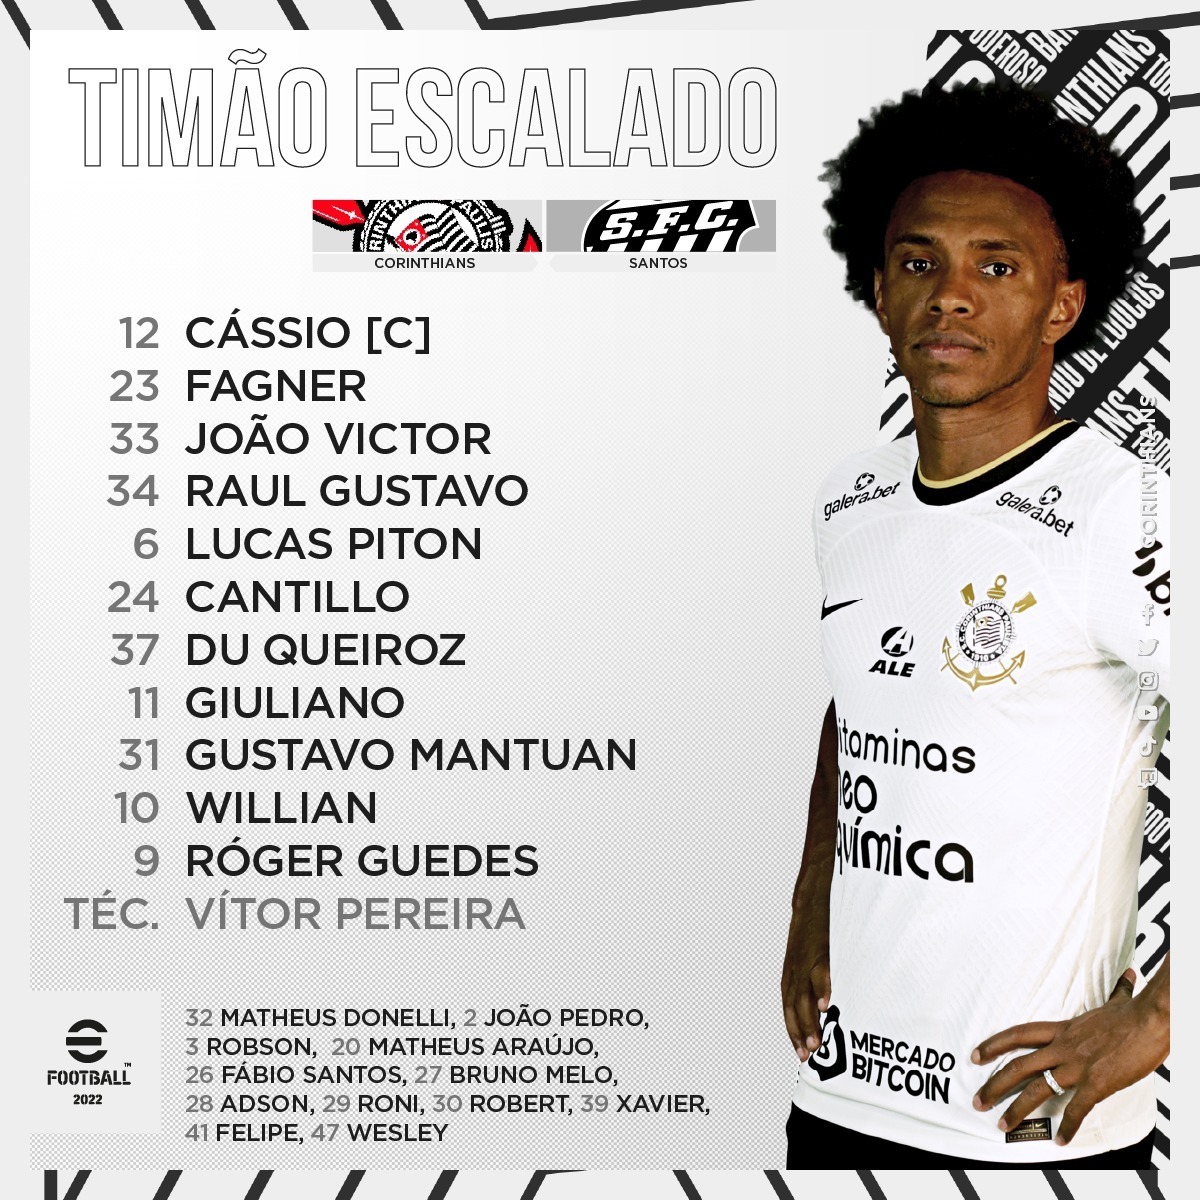 @Corinthians's photo on TIMÃO